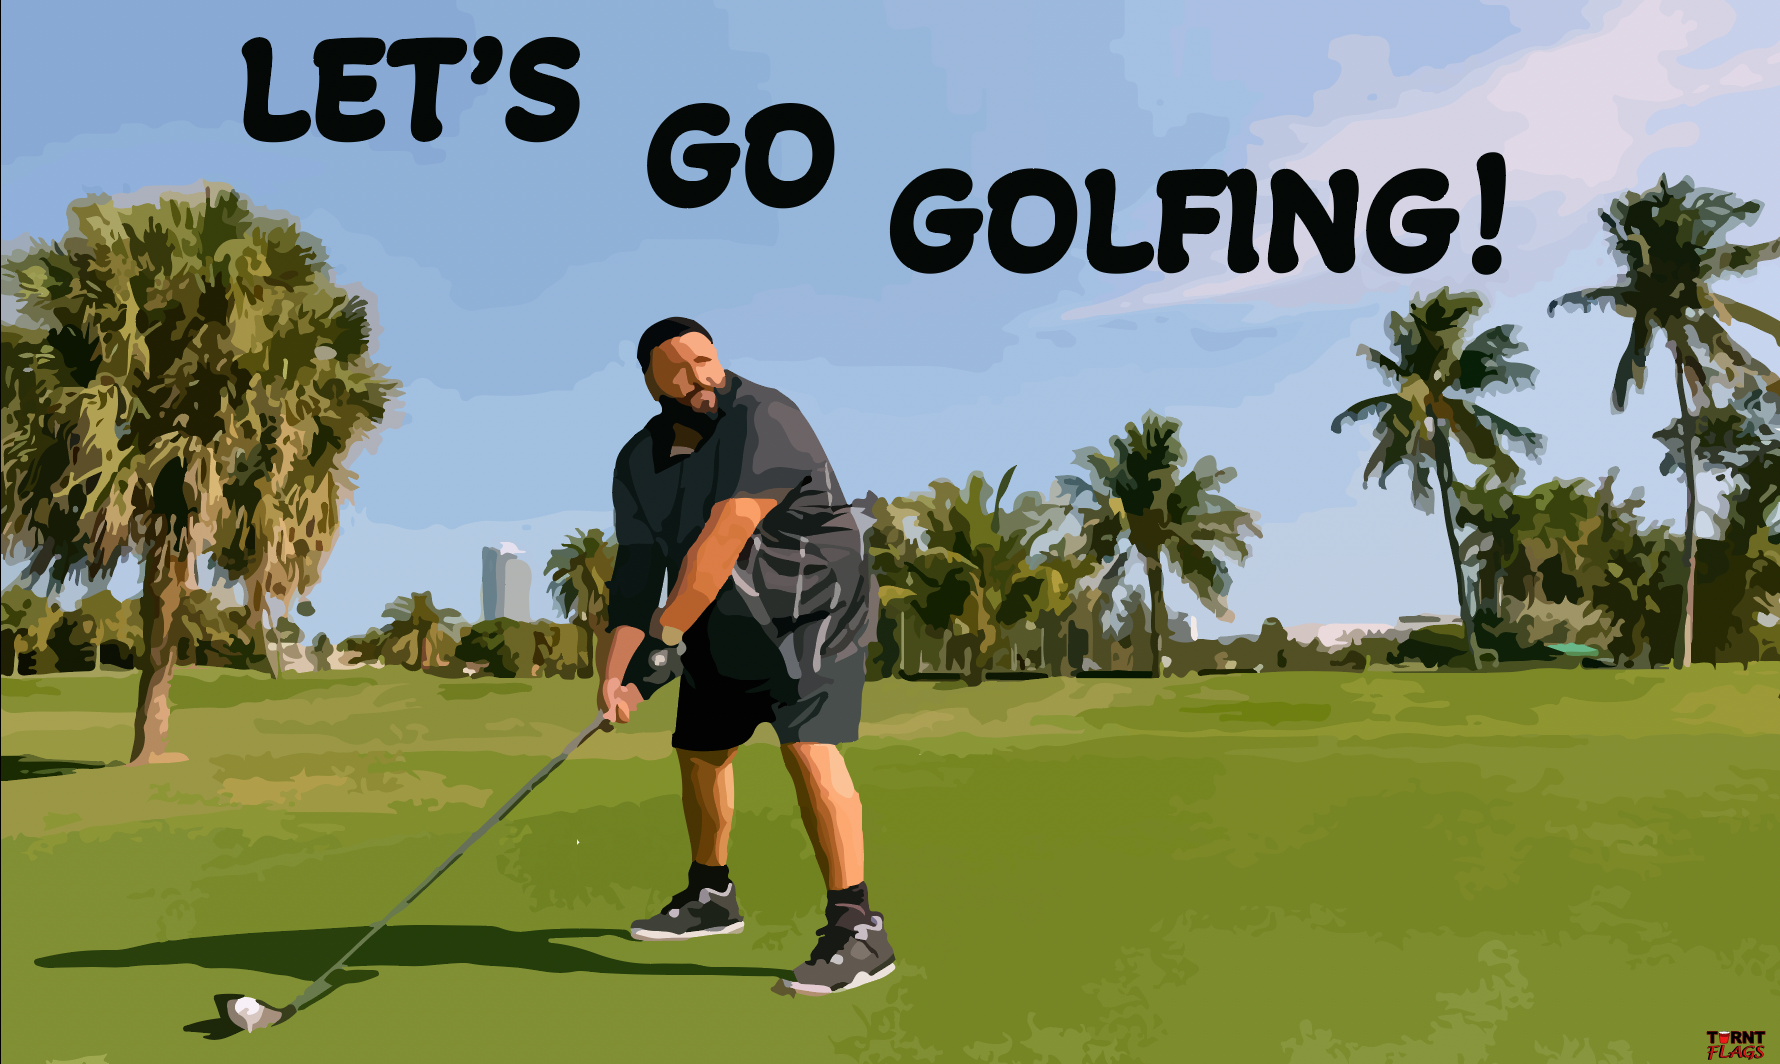 Let's go Golfing!